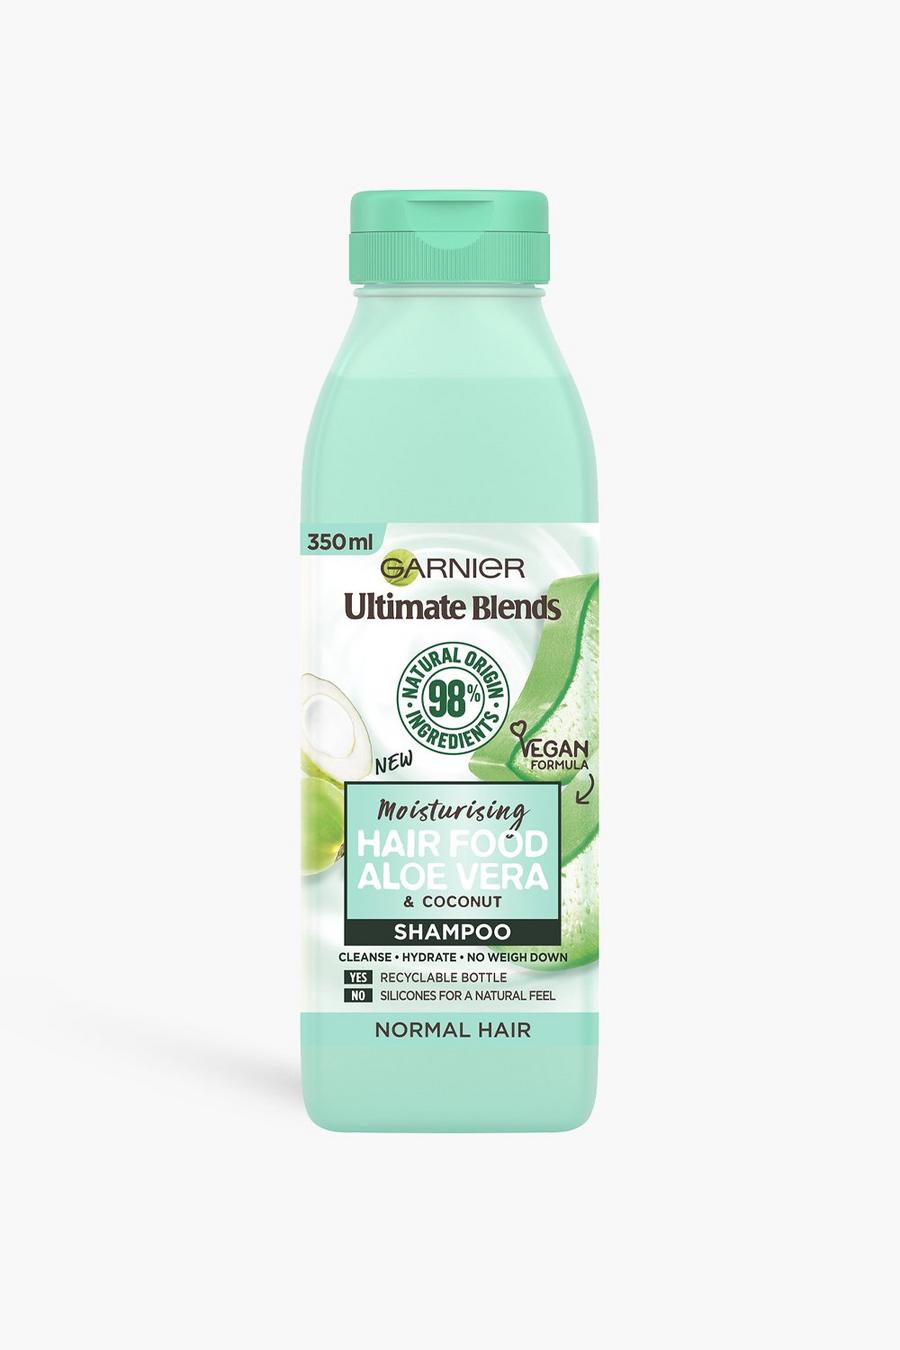 Green Garnier Ultimate Blends Moisturising Hair Food Aloe Vera Shampoo for Normal Hair 350ml